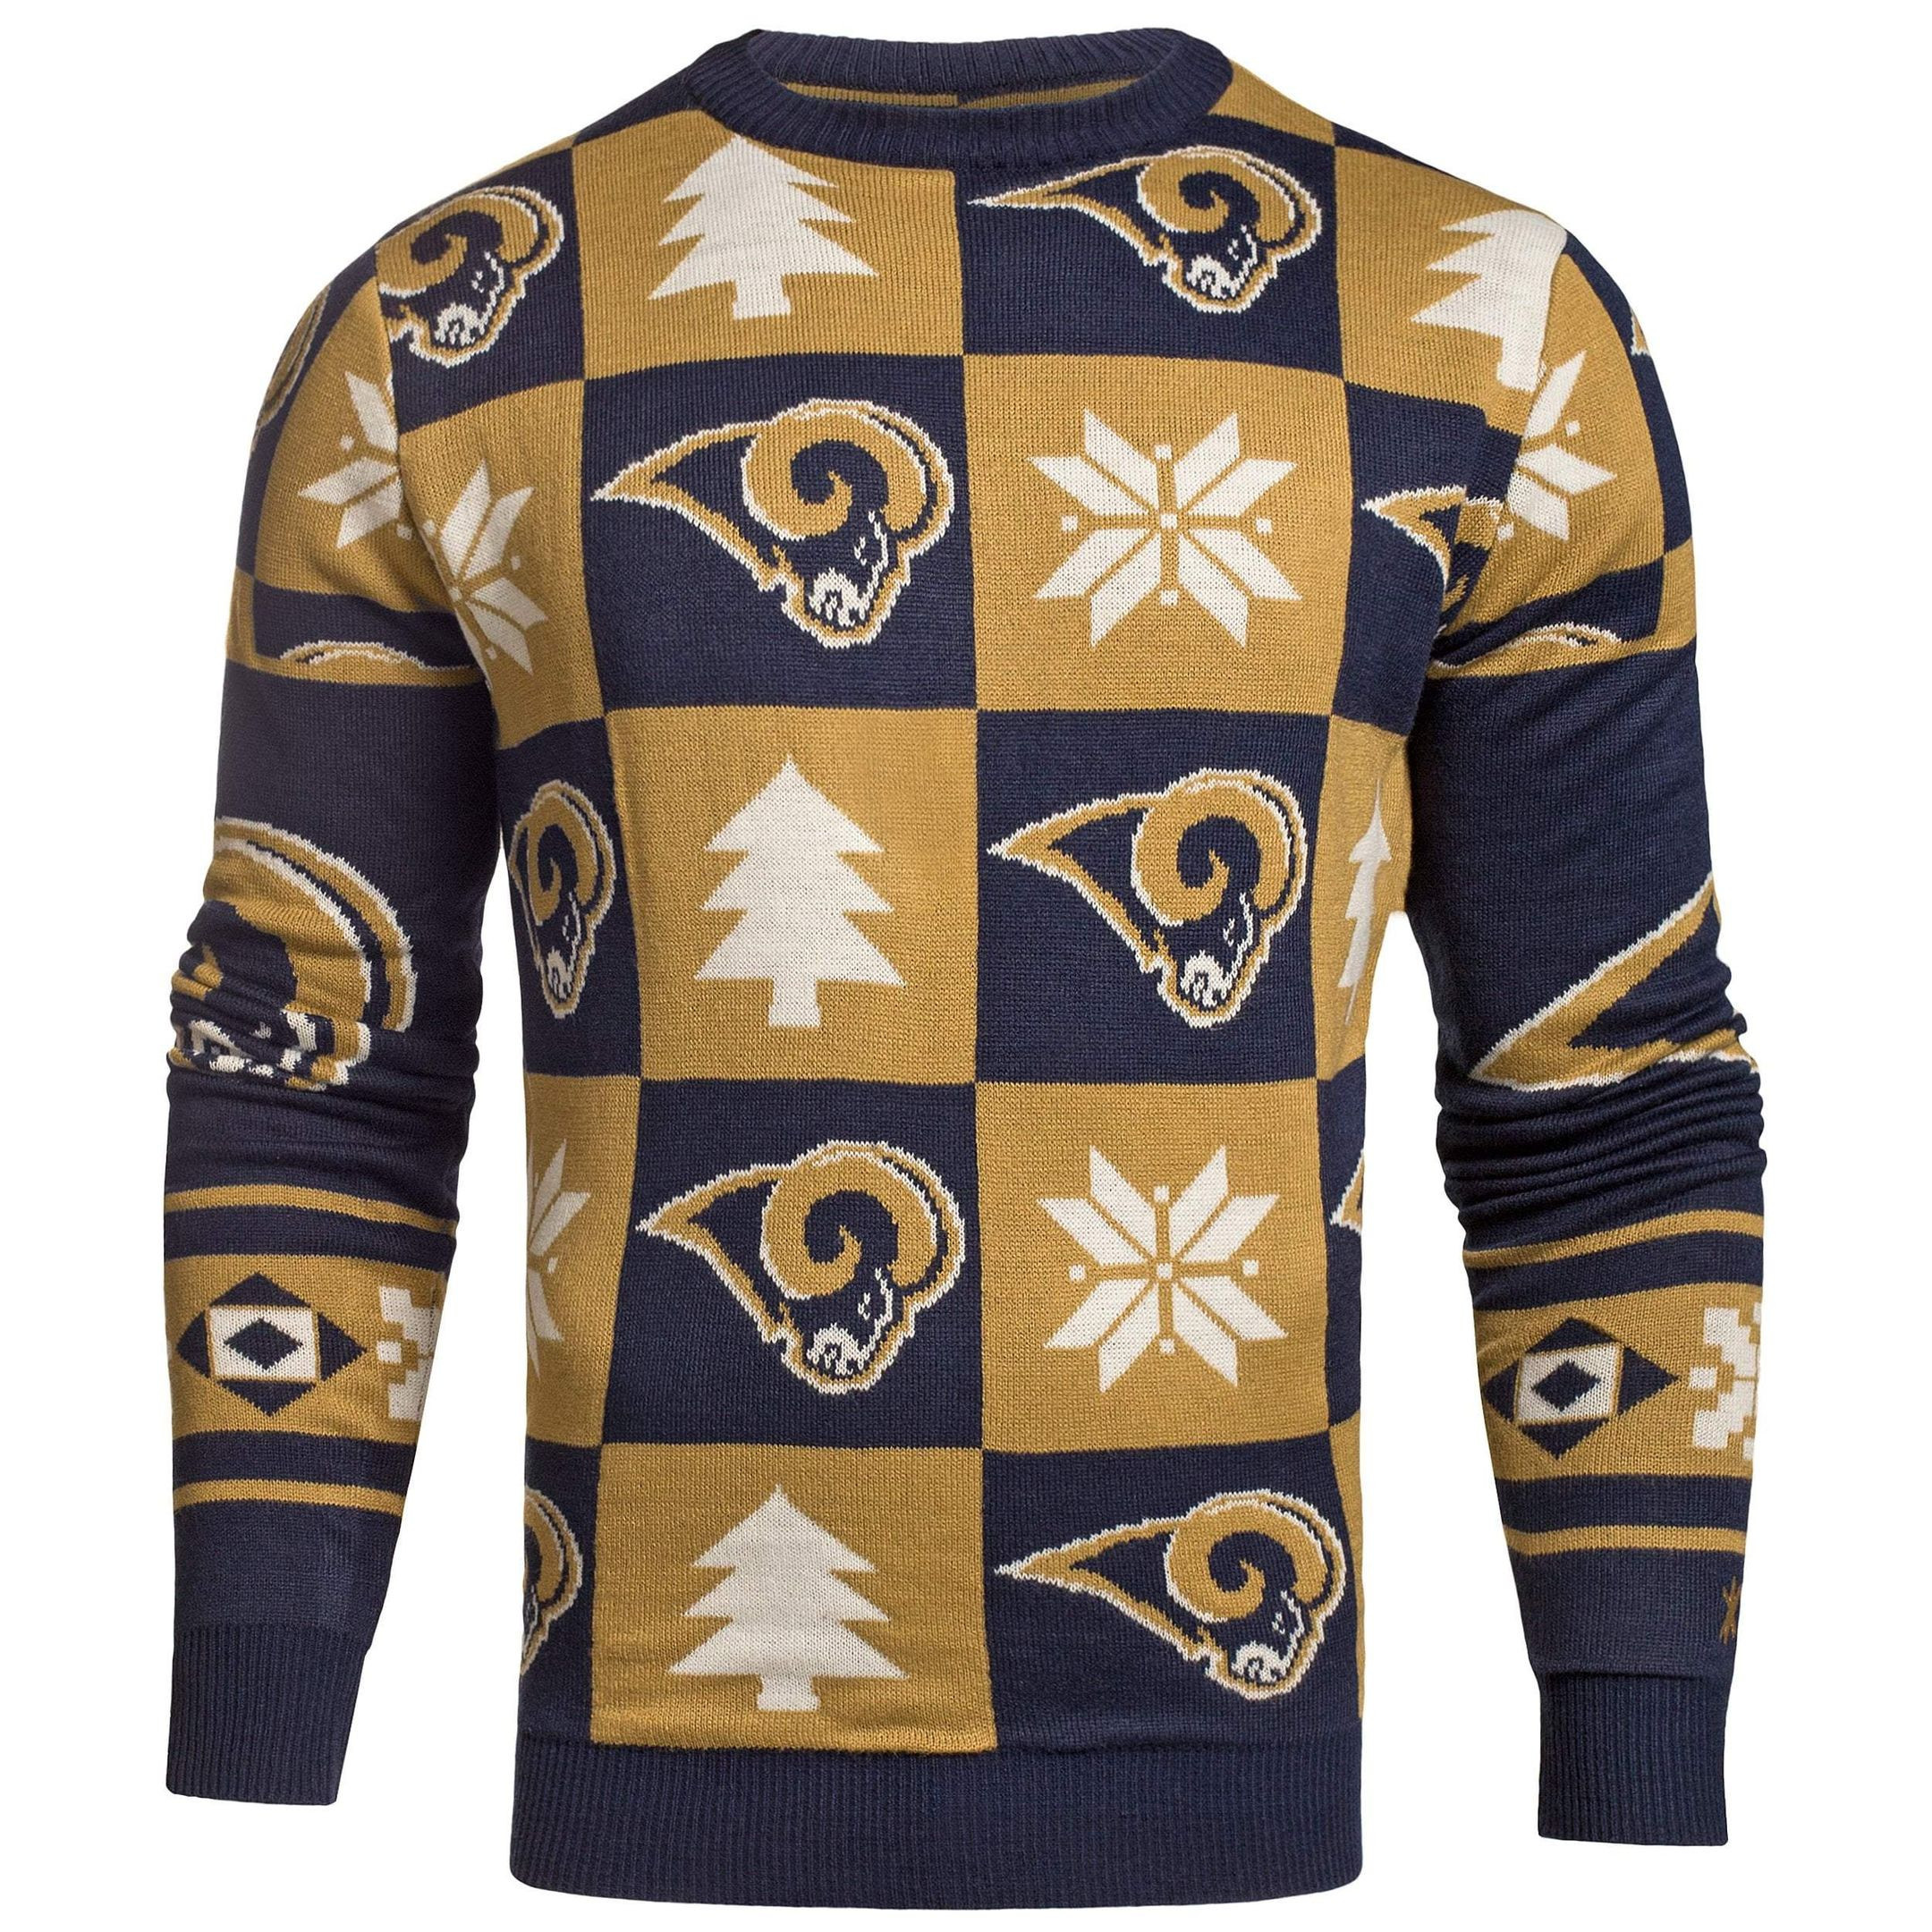 Los Angeles LA Rams Ugly Christmas Sweater All Over Print